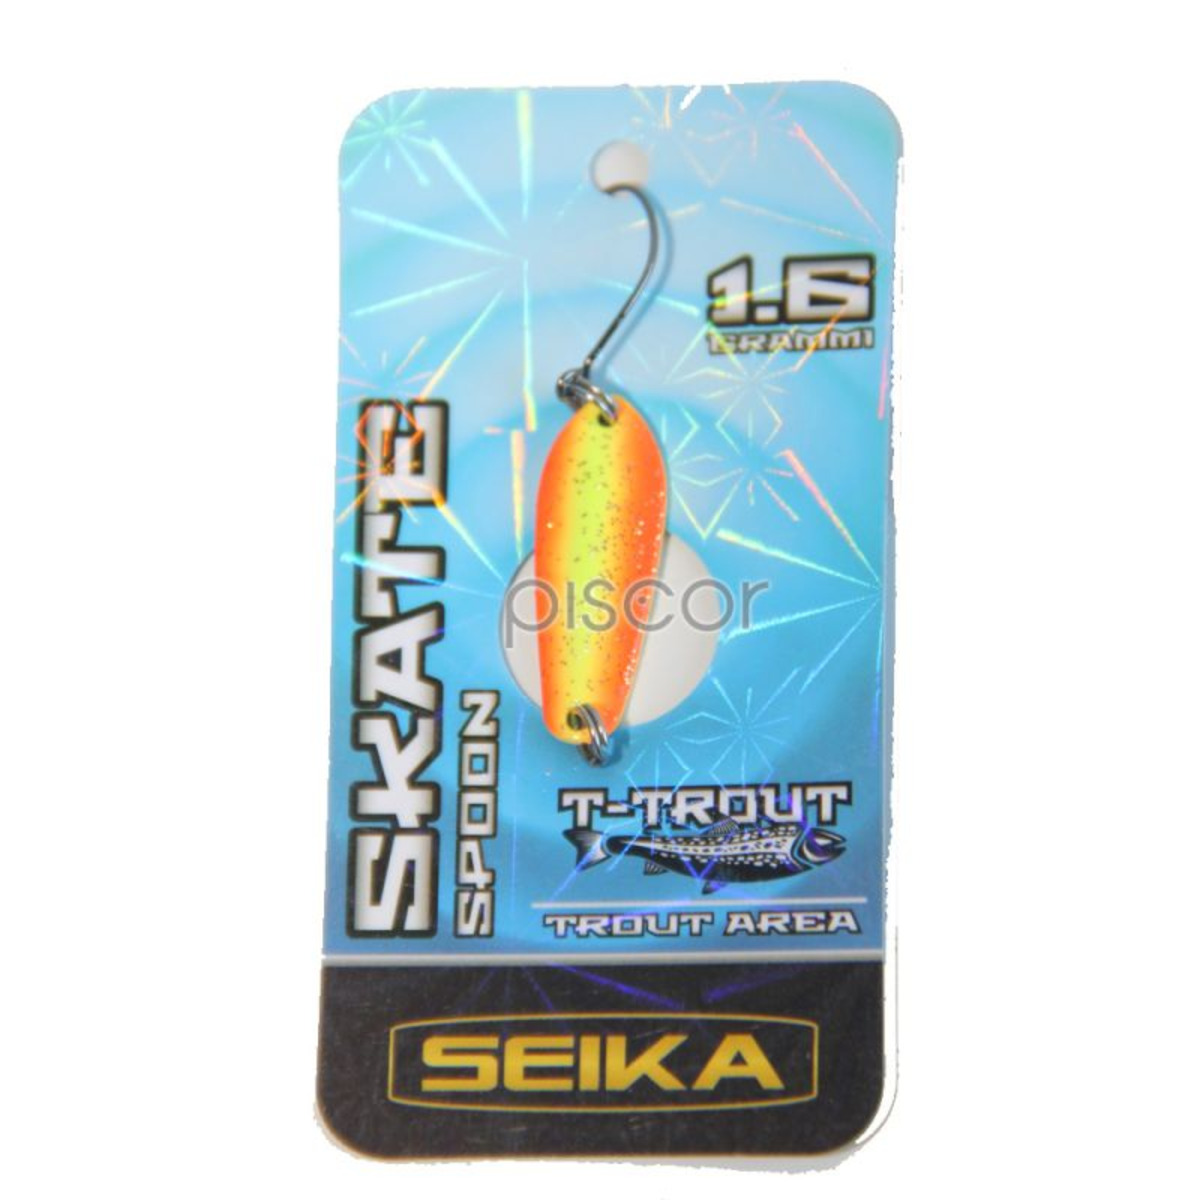 Seika Skate Spoon - 25 mm - 1.6 g - Glitter Orange Yellow